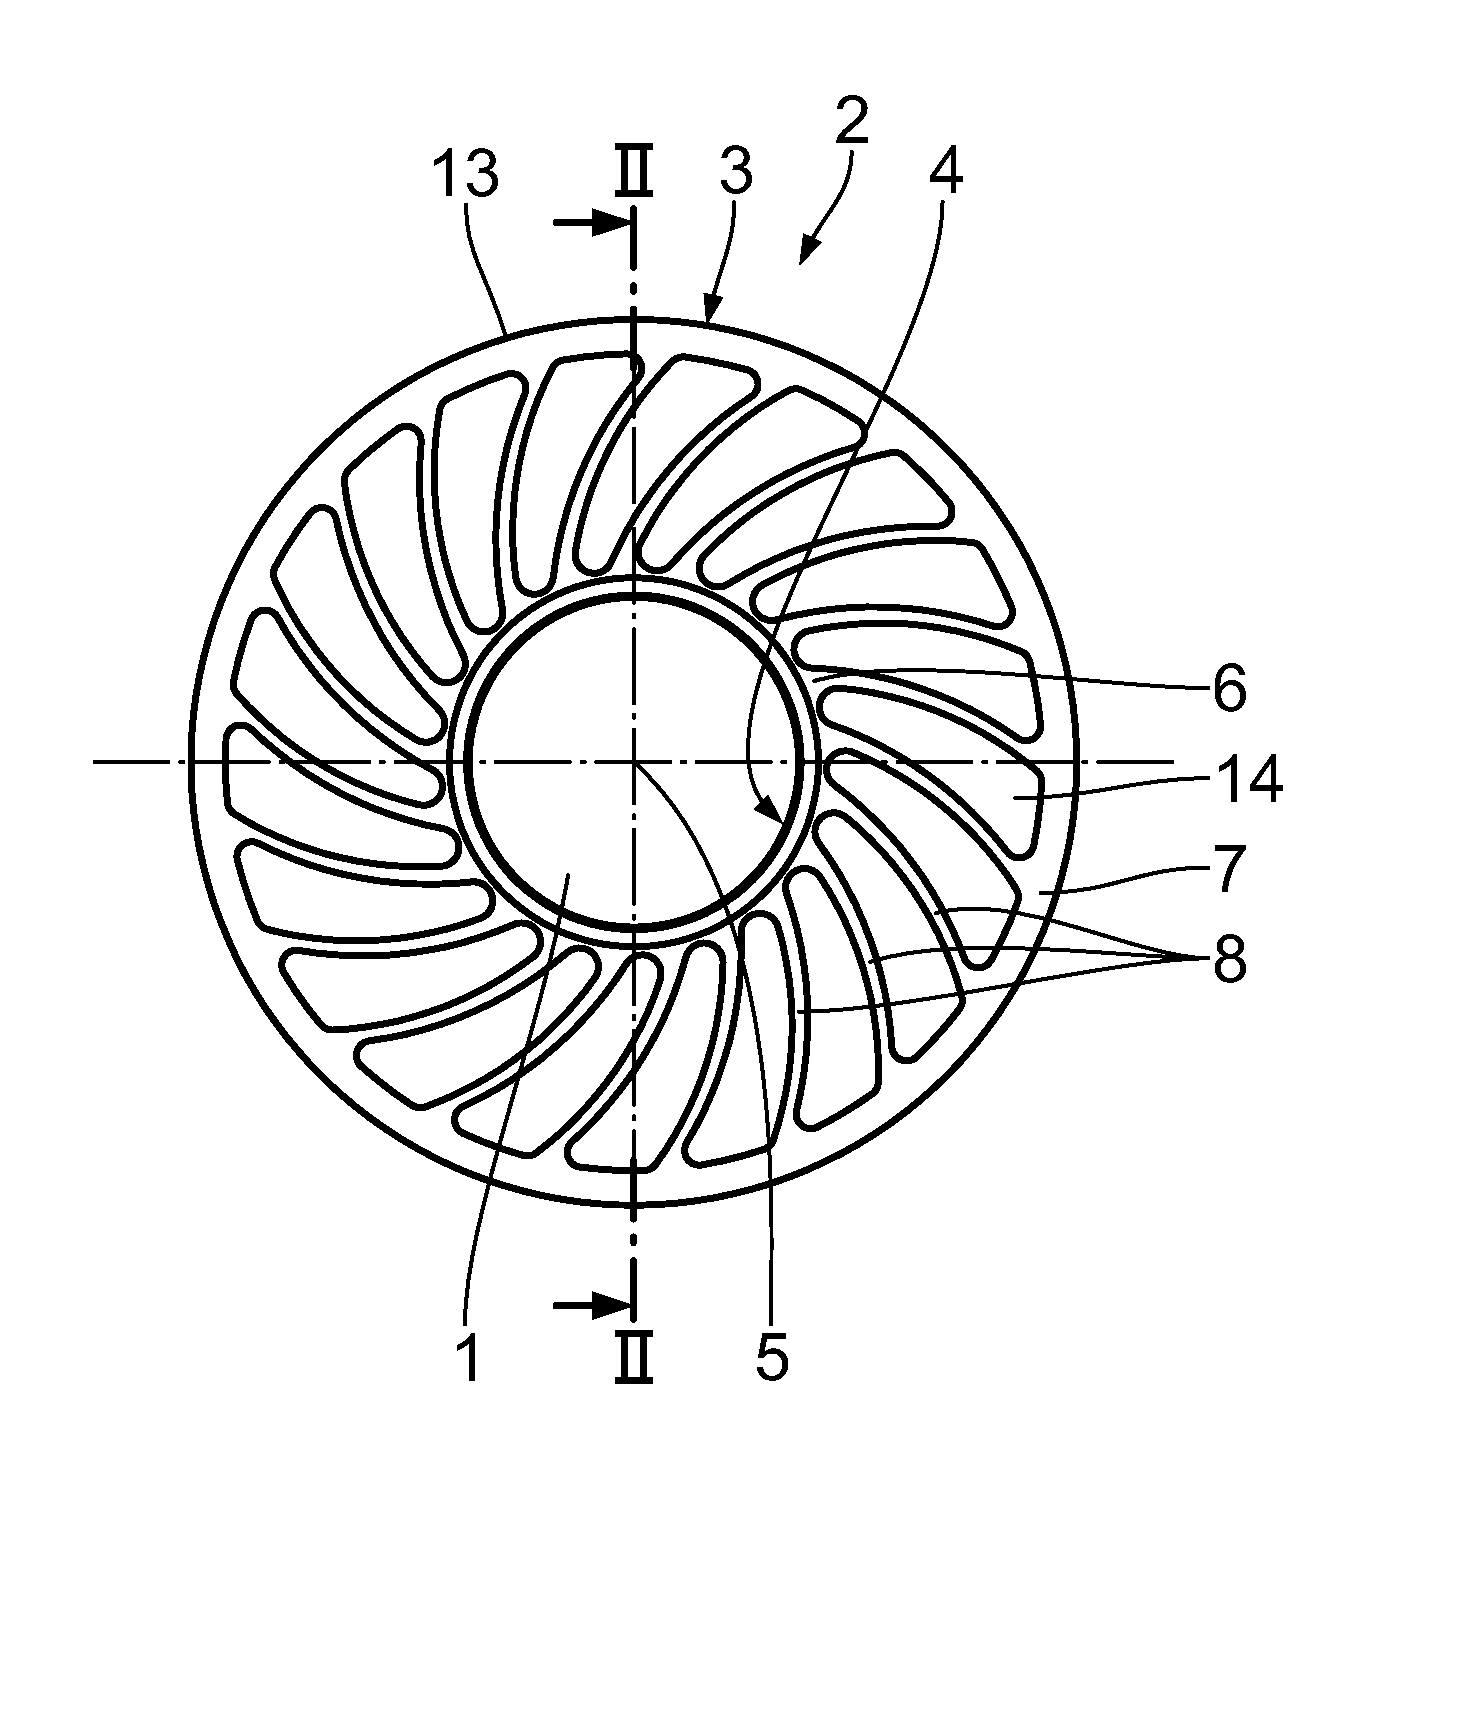 Guide wheel arrangement